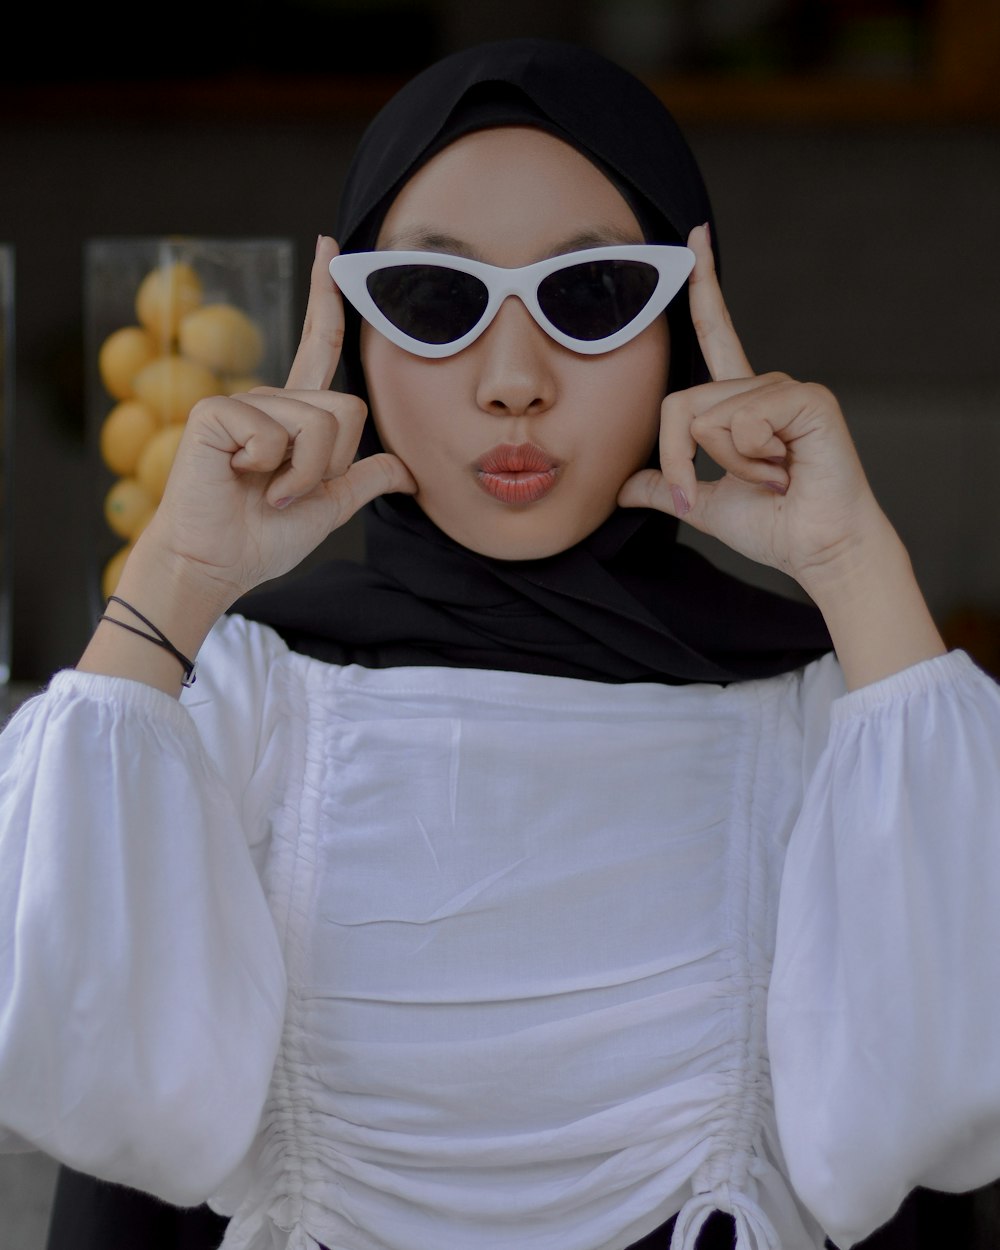 a woman wearing a white dress and black sunglasses